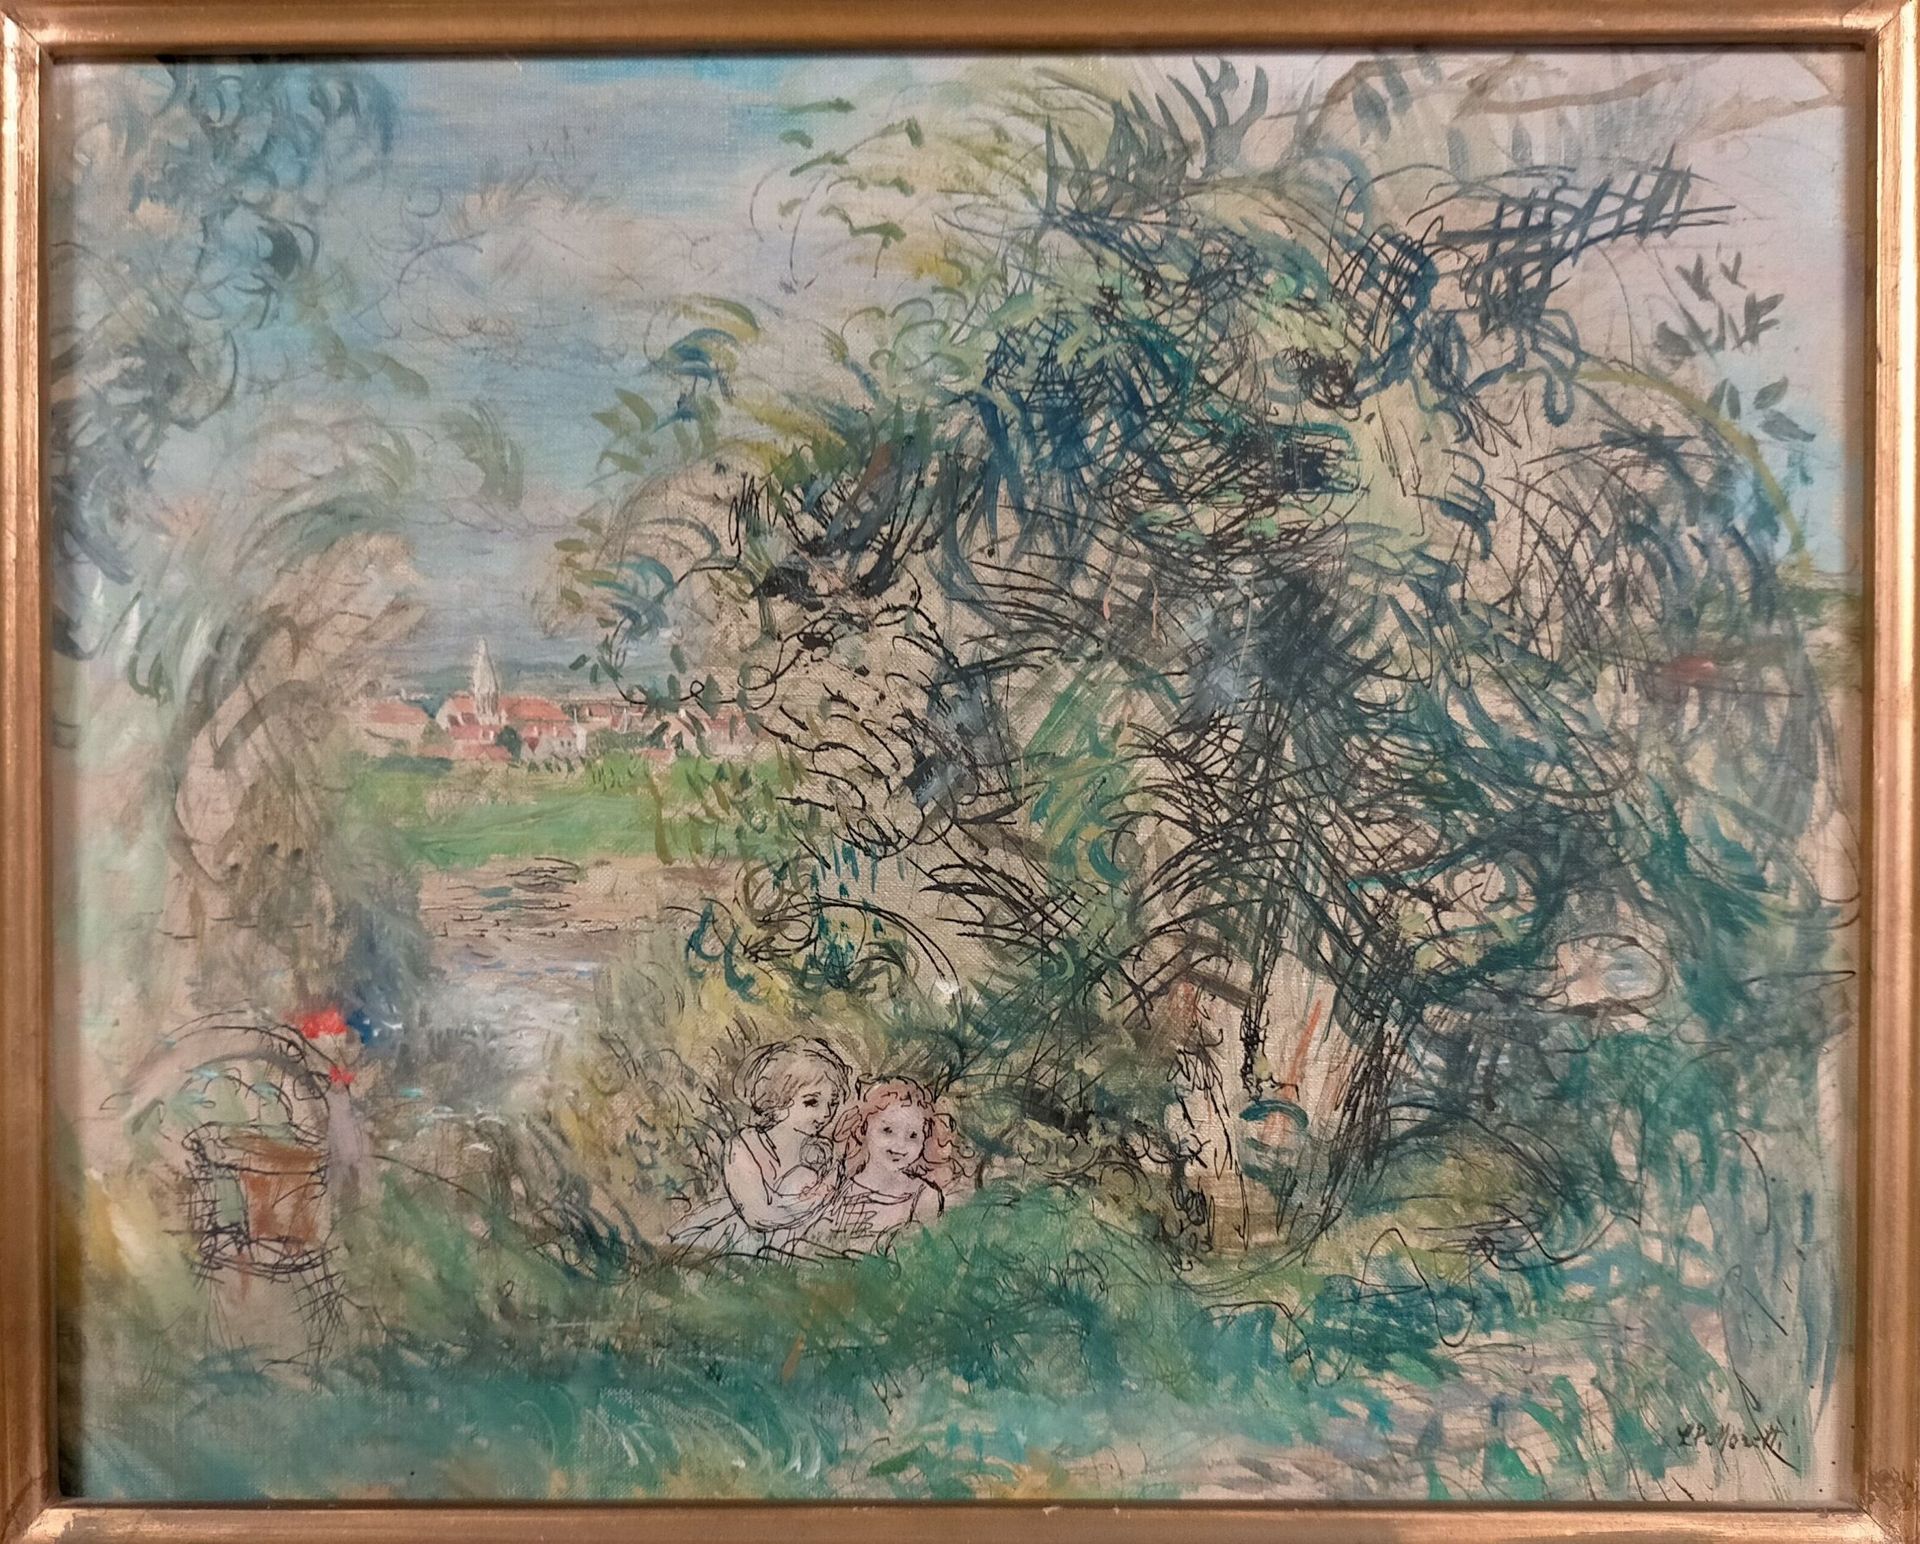 Null 吕西安-菲利普-莫雷蒂 (1922 - 2000)
"森林风景中的孩子"。
油墨画布，右下角有签名。 
22 x 27 cm 
出处：La Chign&hellip;